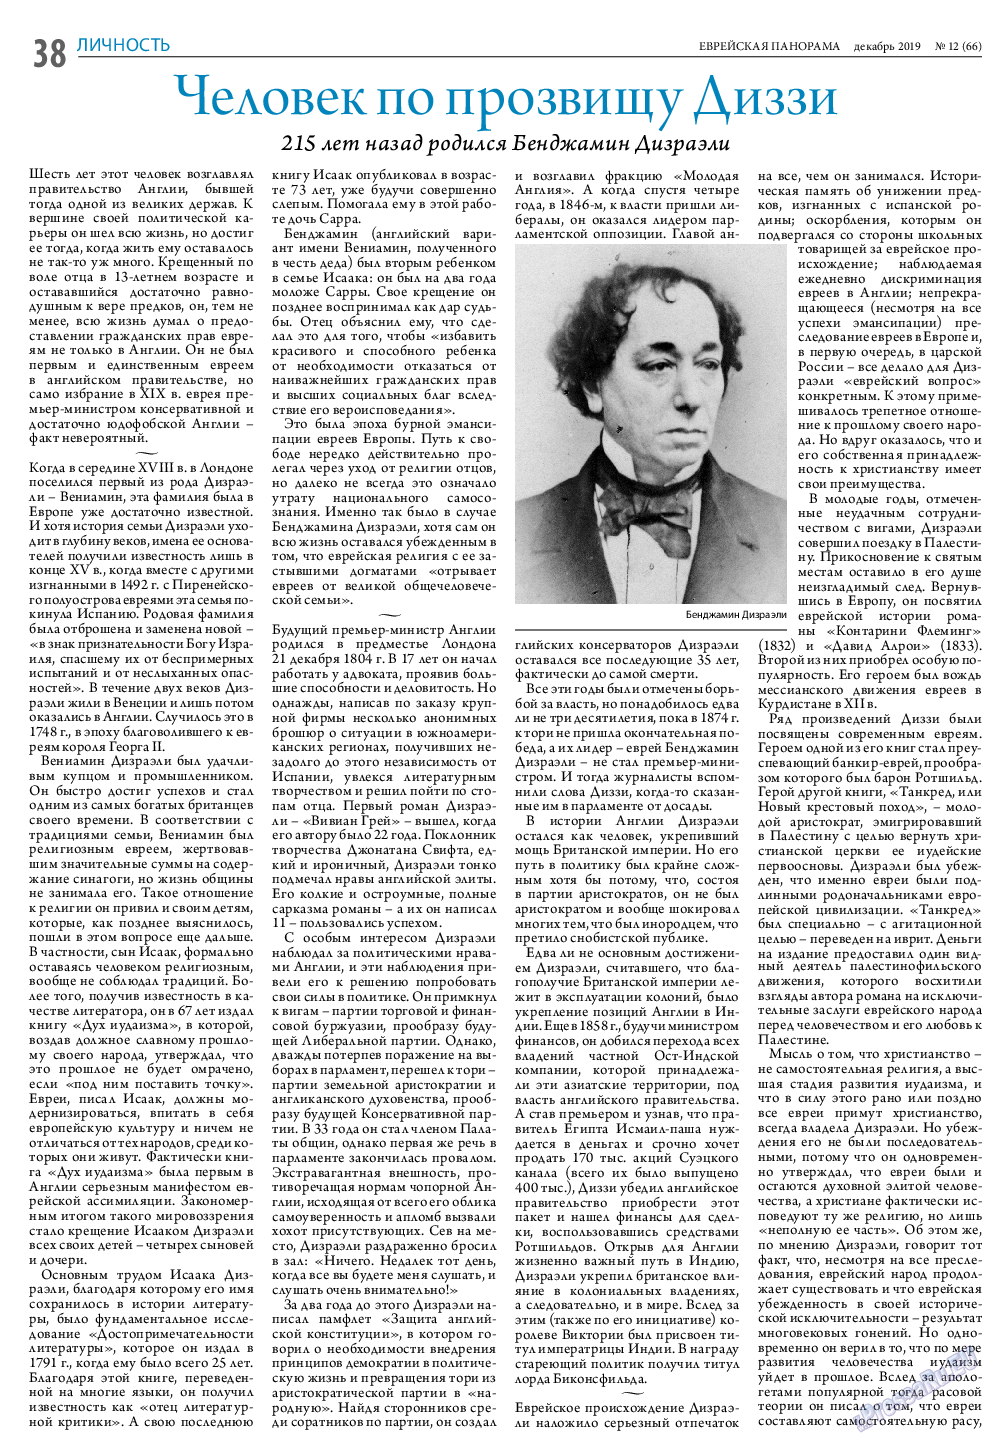 Еврейская панорама, газета. 2019 №12 стр.38